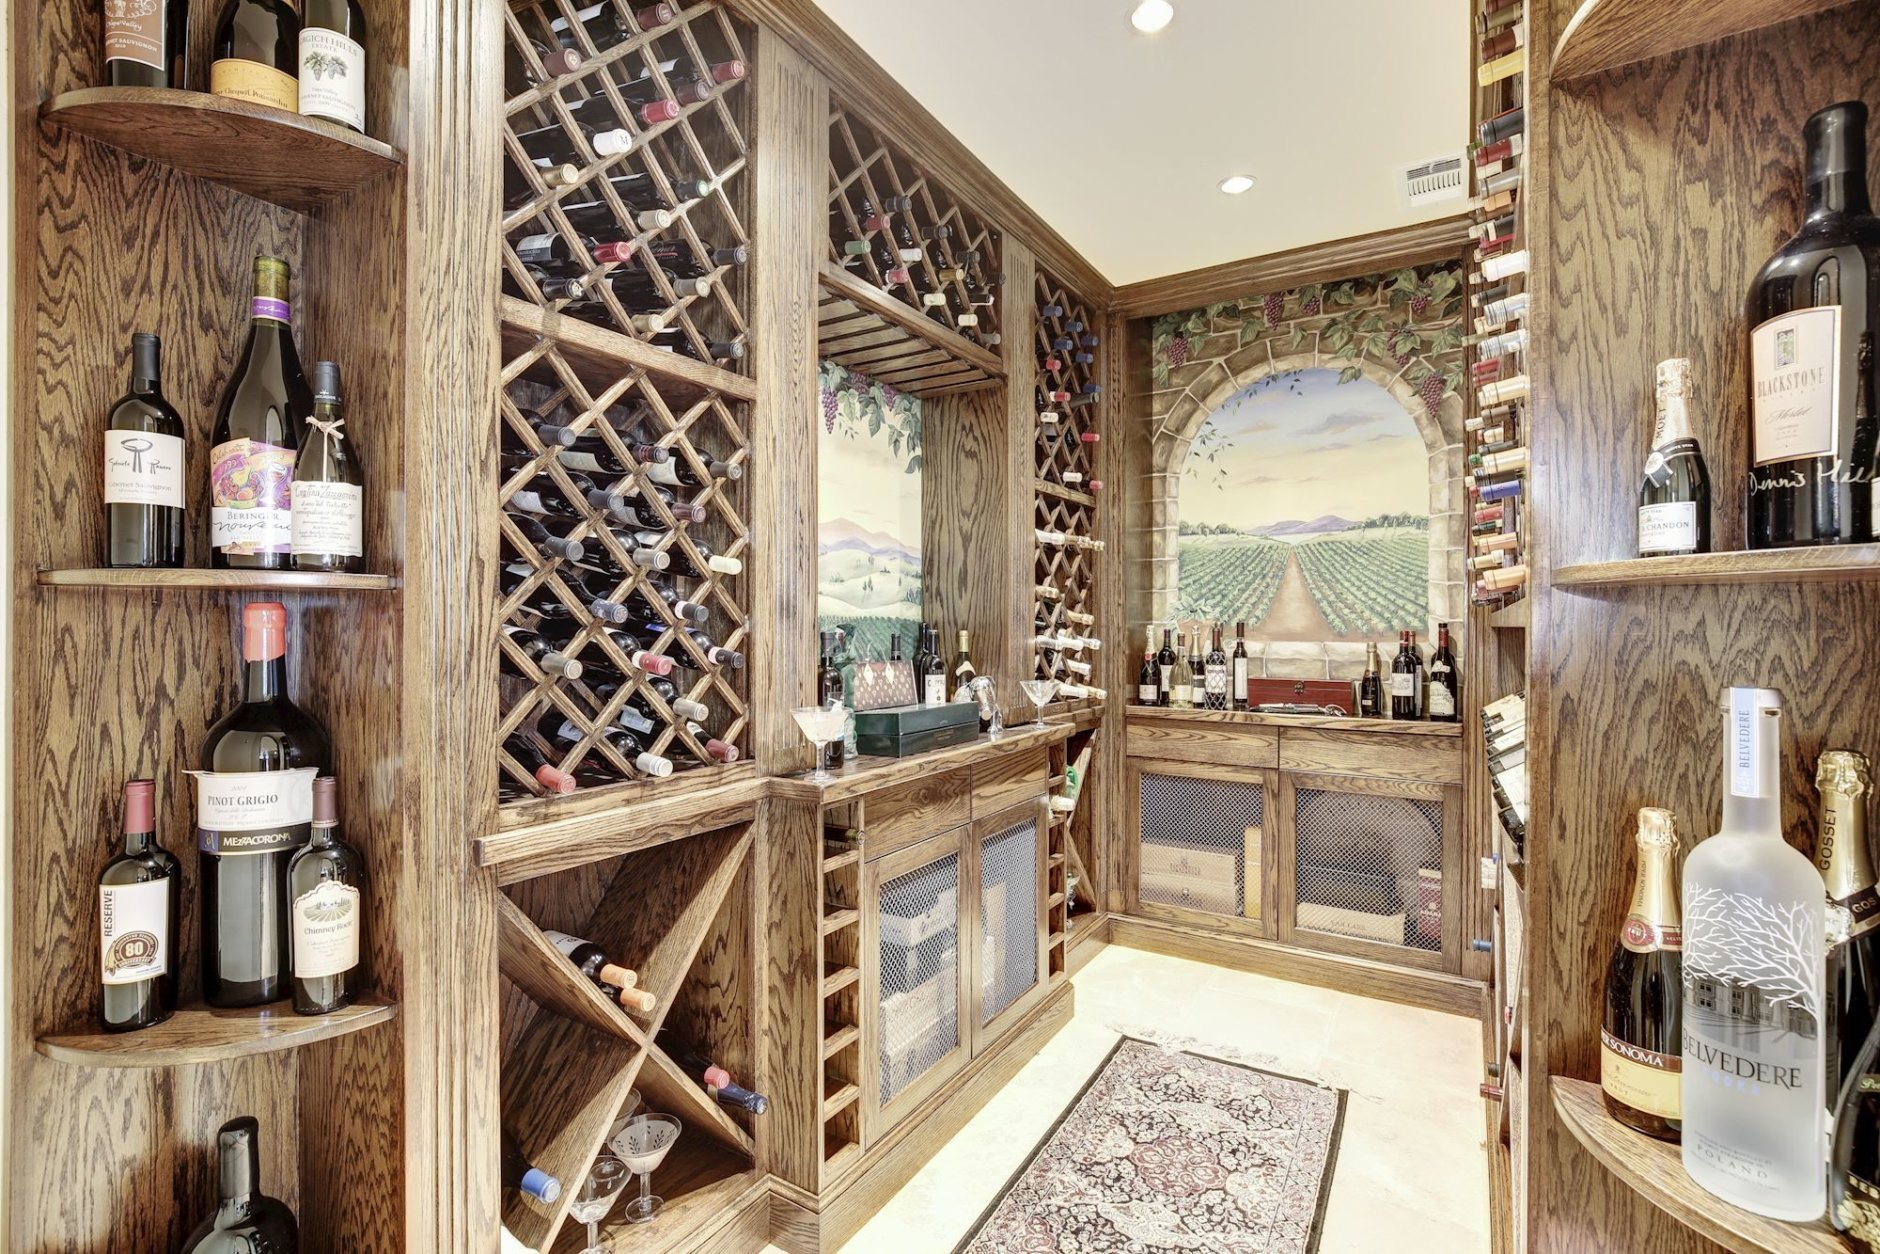 The wine cellar. (Courtesy Washington Fine Properties)